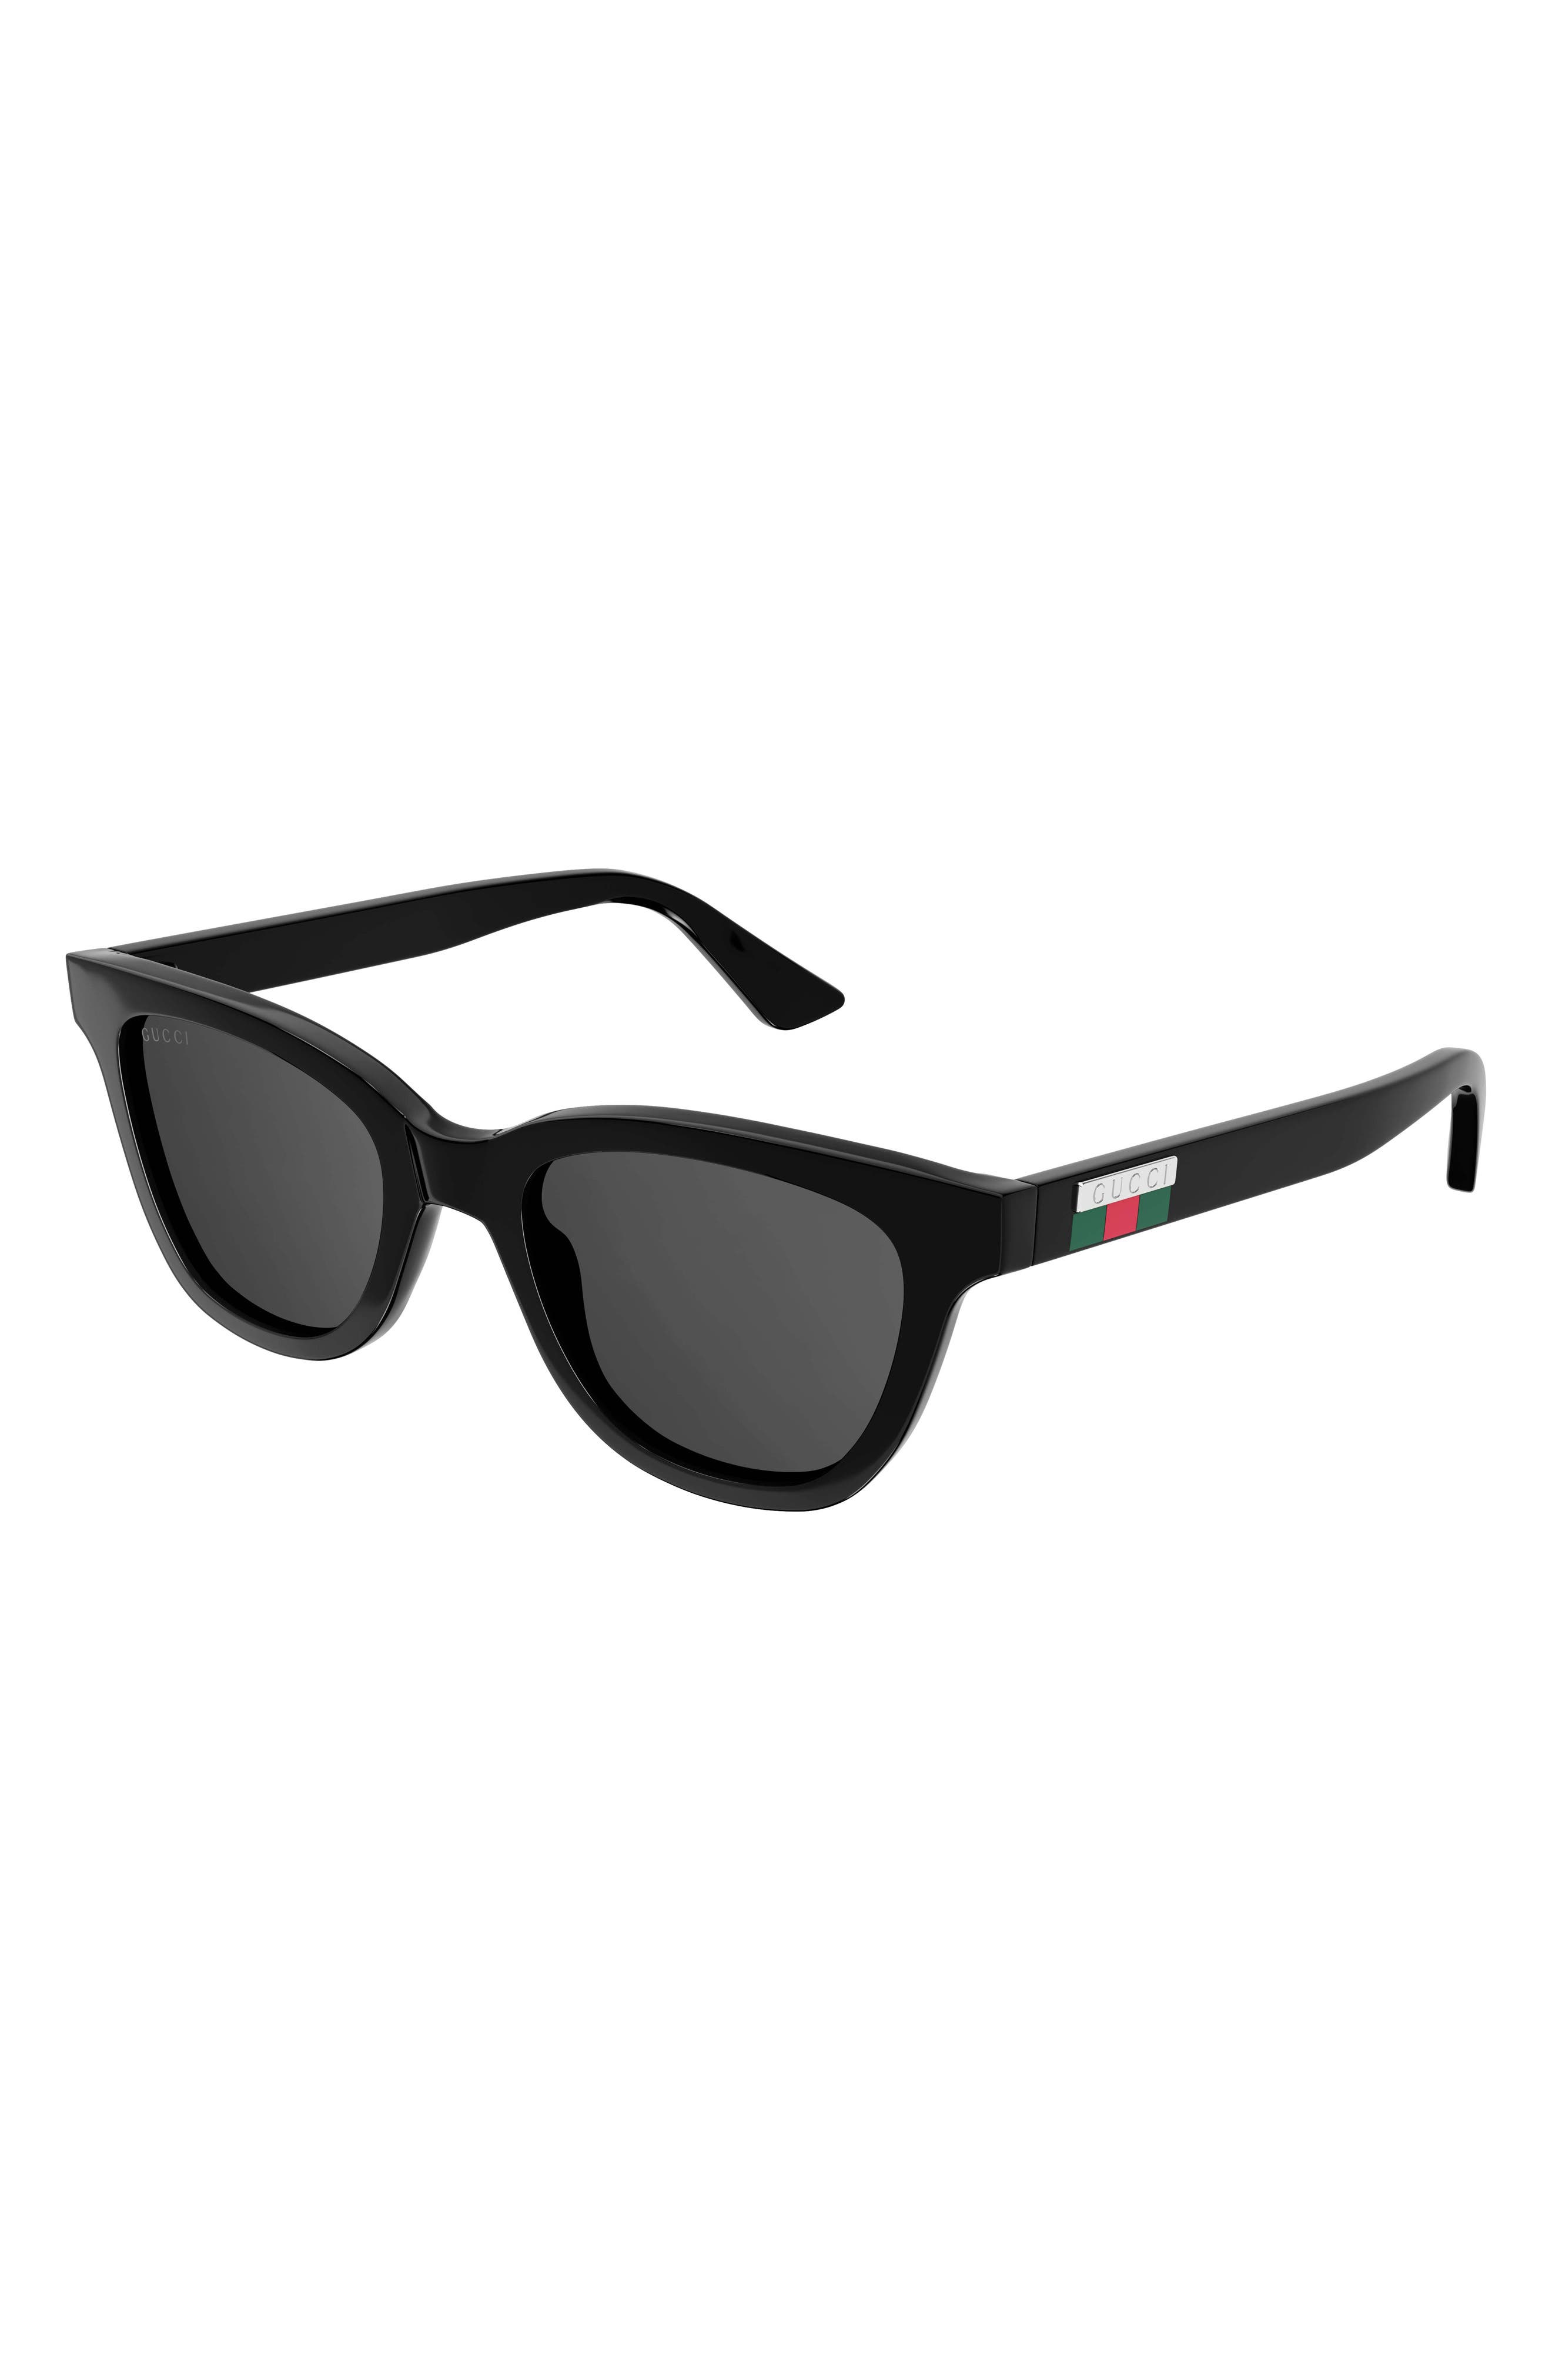 Gucci 51mm Rectangular Sunglasses in Black at Nordstrom